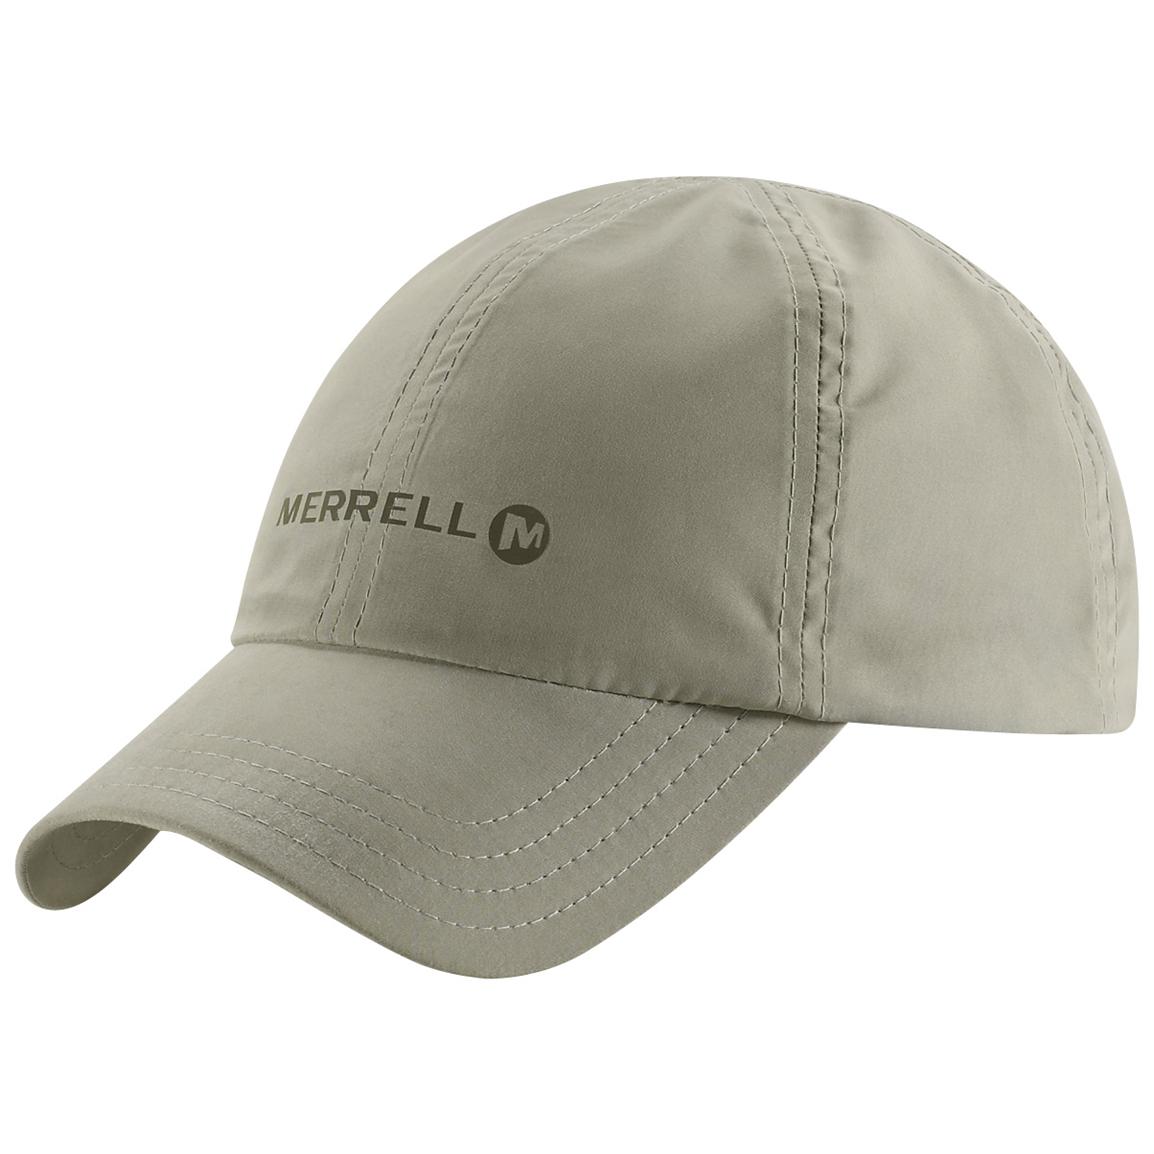 Men's Merrell® Sierra Ball Cap - 164410, Hats & Caps at Sportsman's Guide